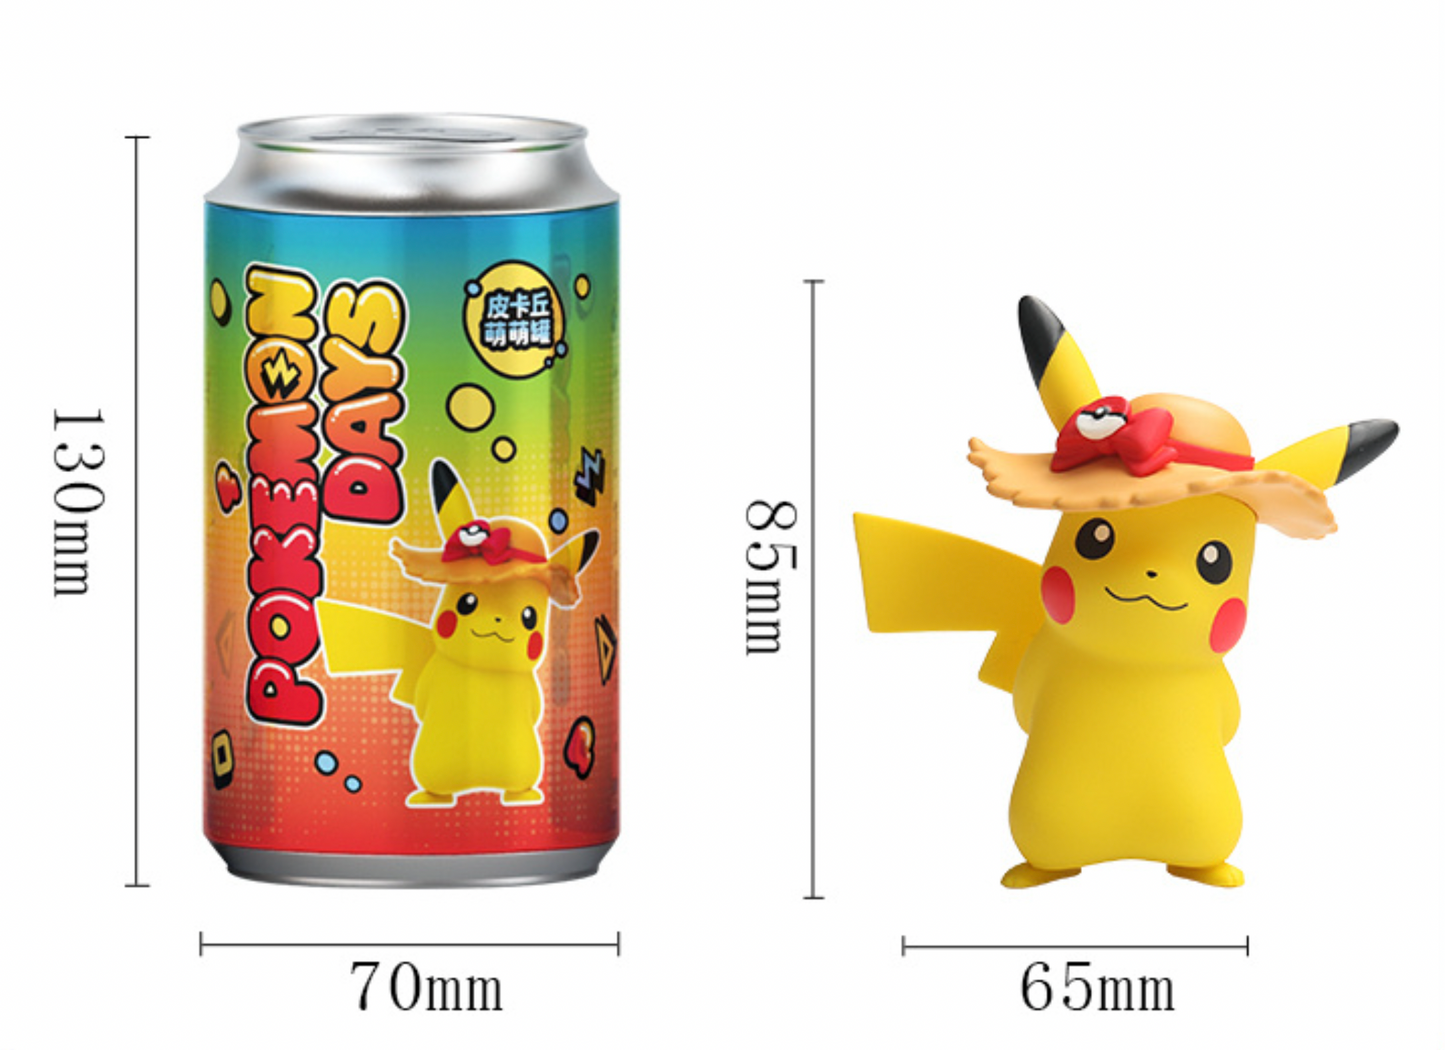 Pokemon Days Pikachu Display Figure